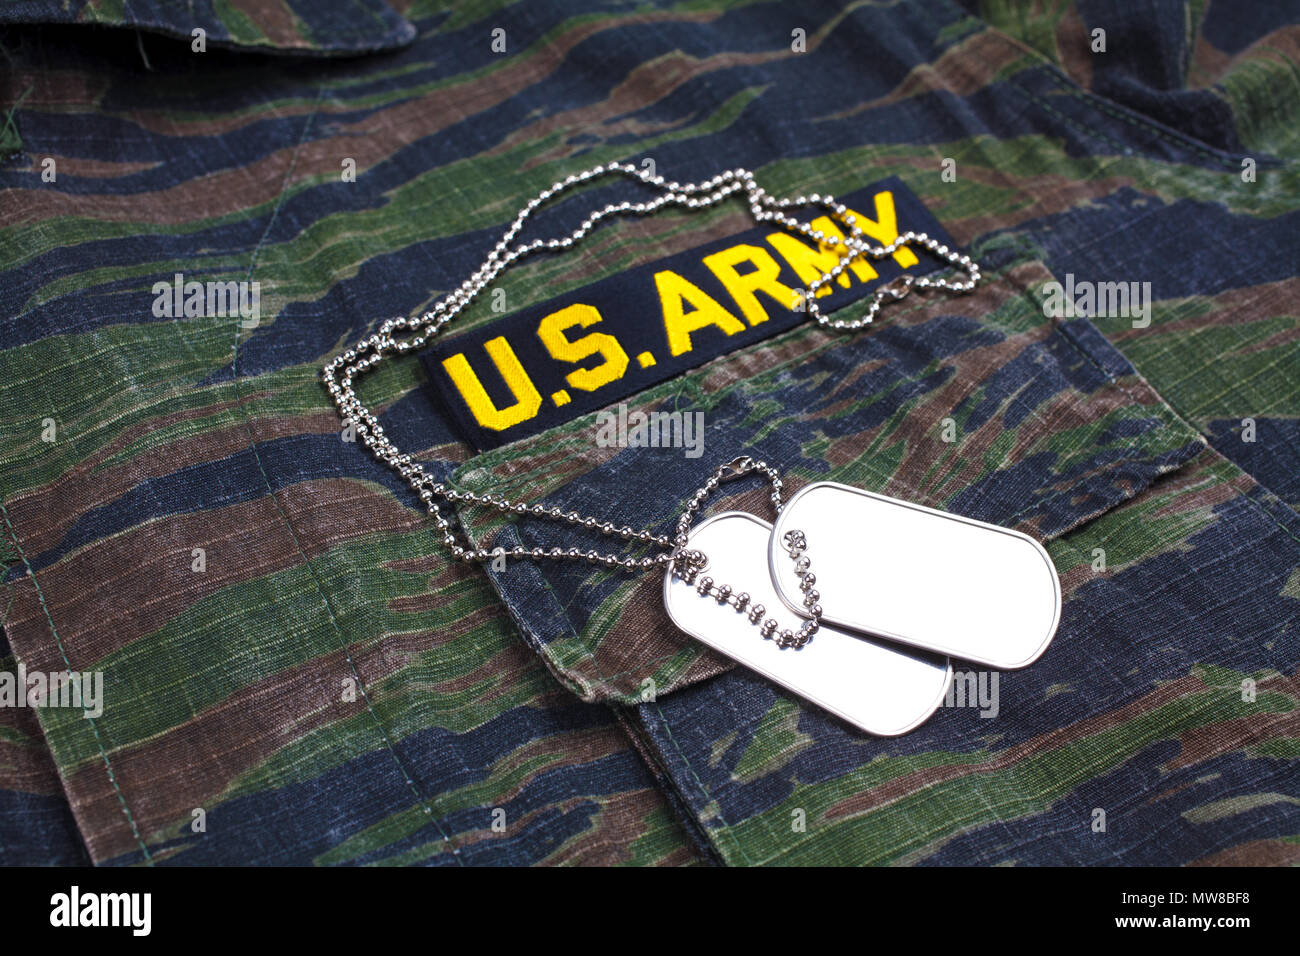 KIEV, UKRAINE - Sept 12, 2016. US ARMY branch tape and dog tags on tiger stripe camouflage uniform Stock Photo